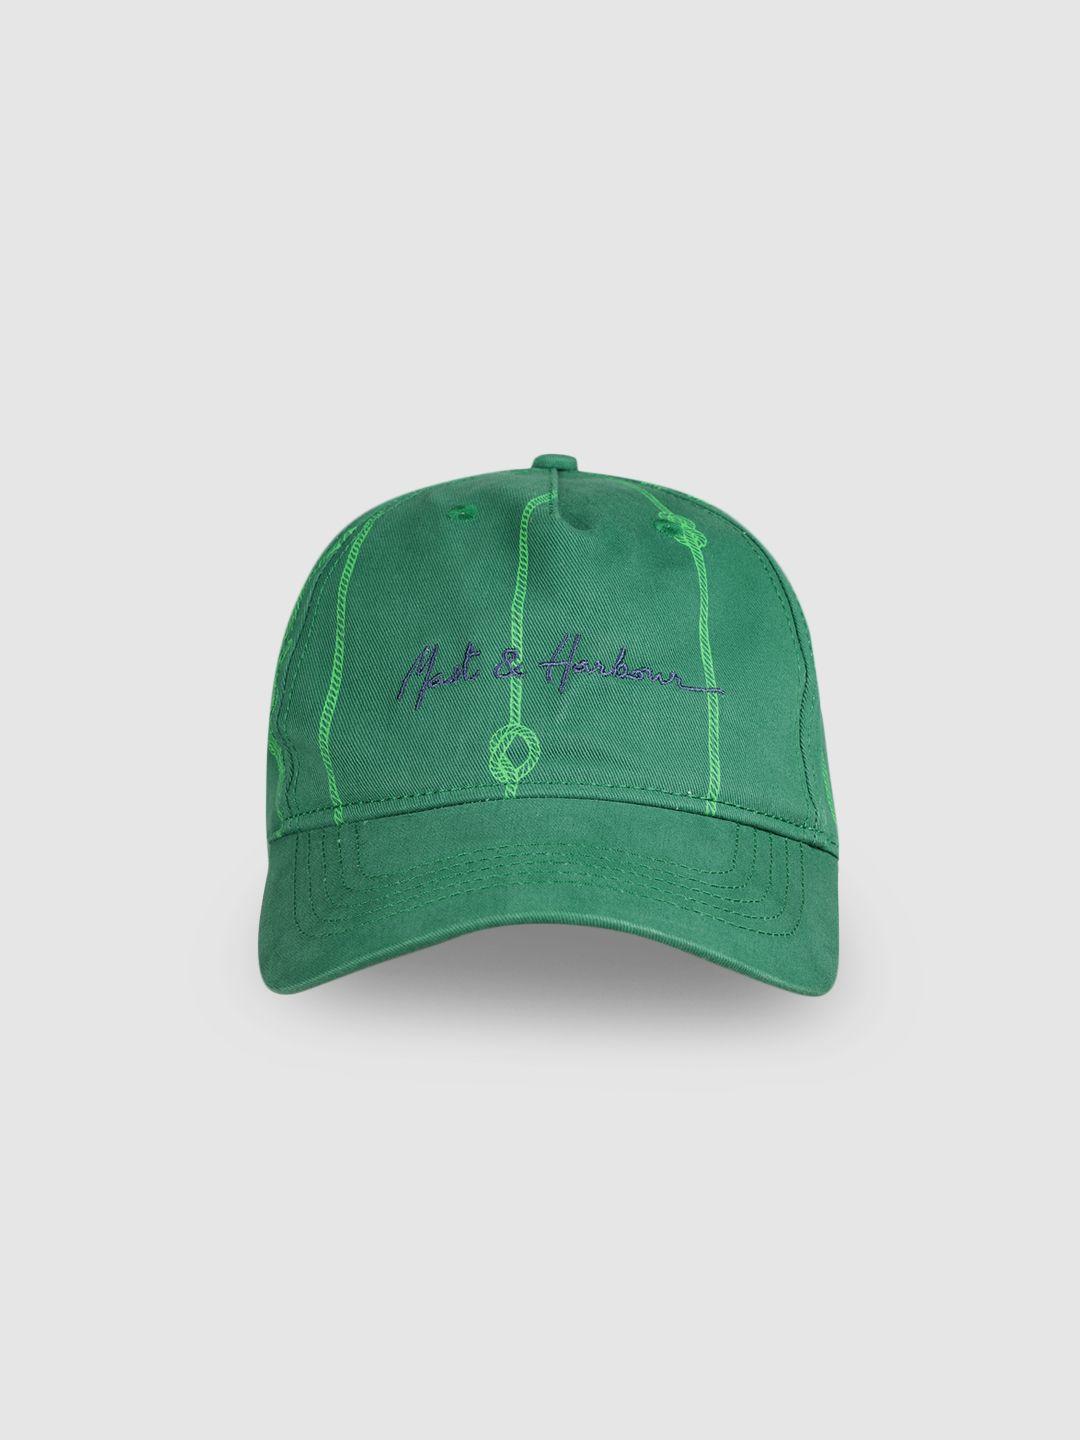 mast-&-harbour-unisex-green-baseball-cap